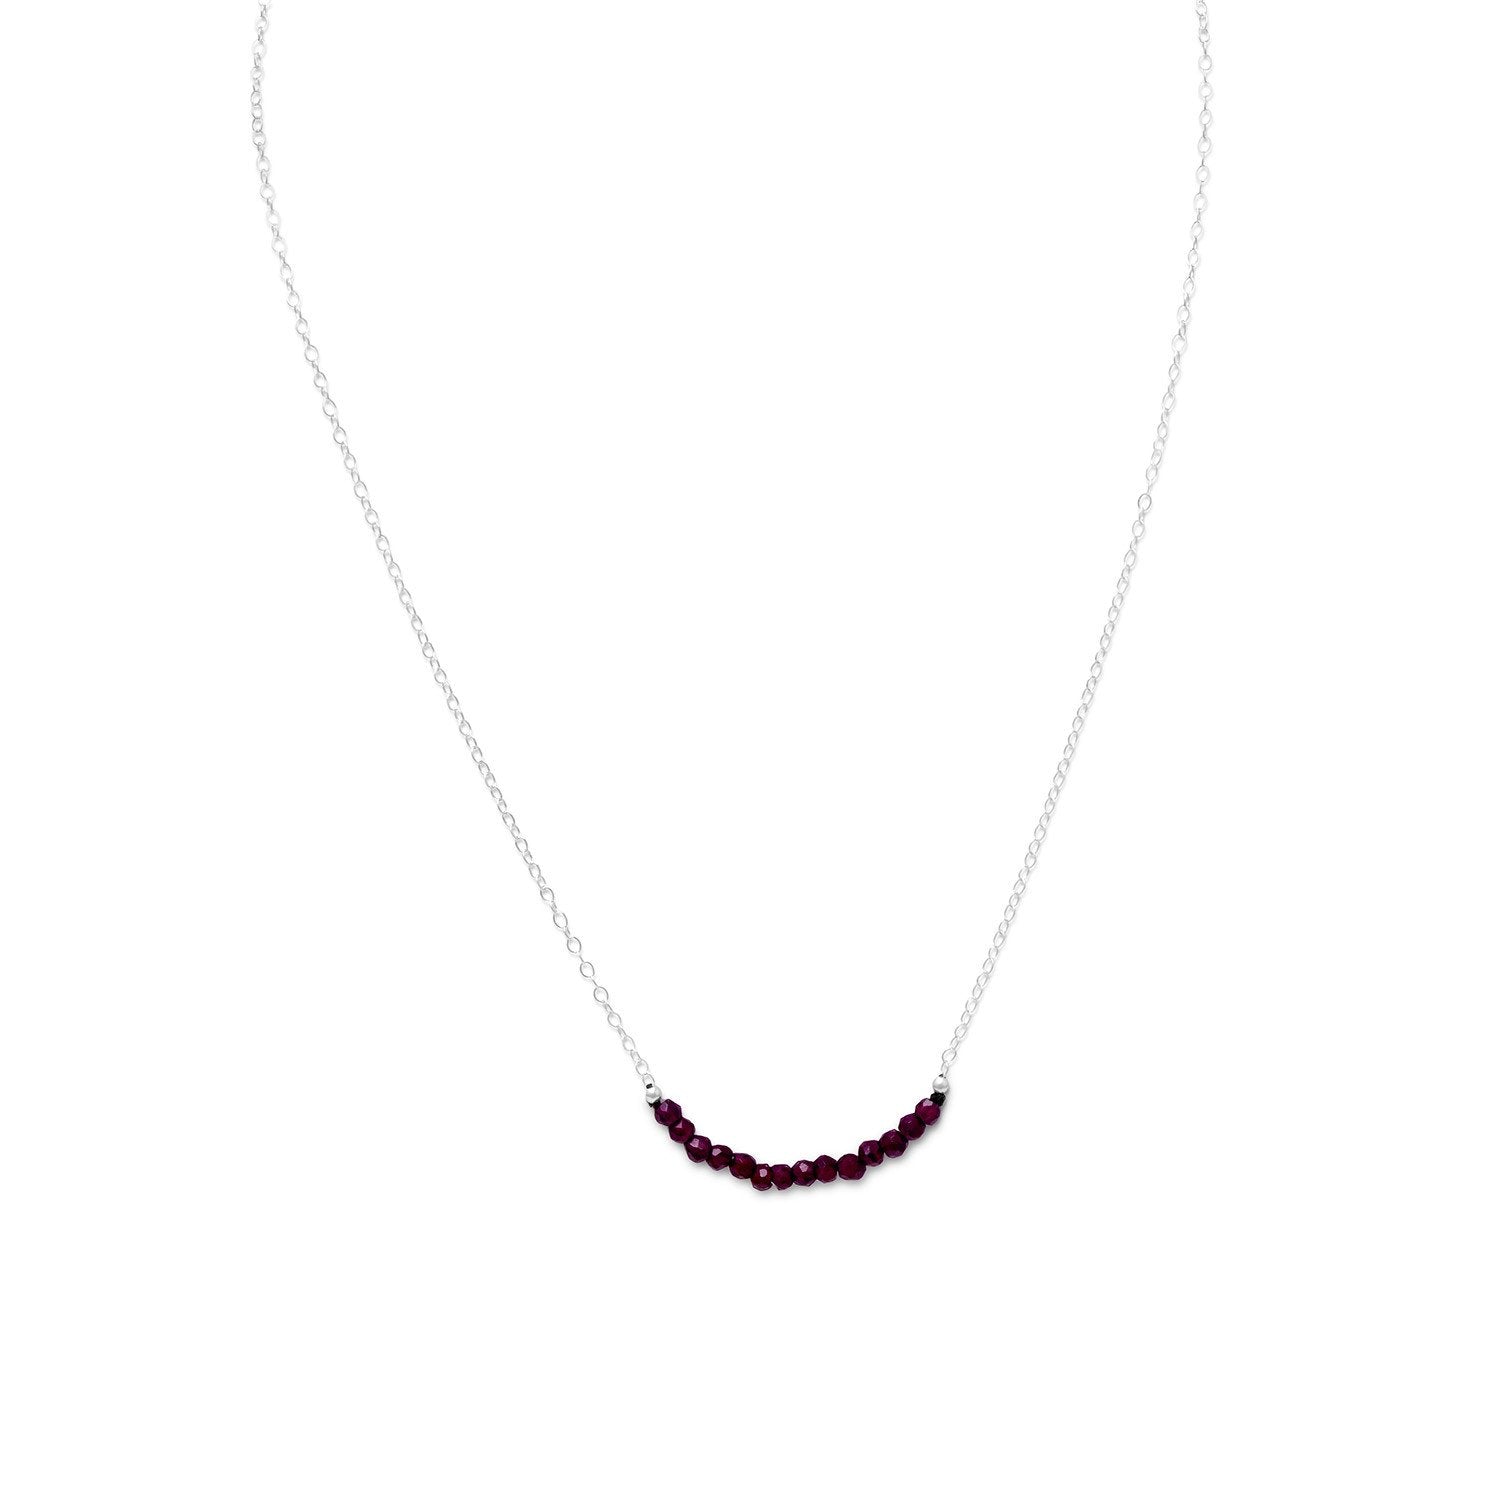 Faceted Garnet Bead Necklace - January Birthstone - Joyeria Lady